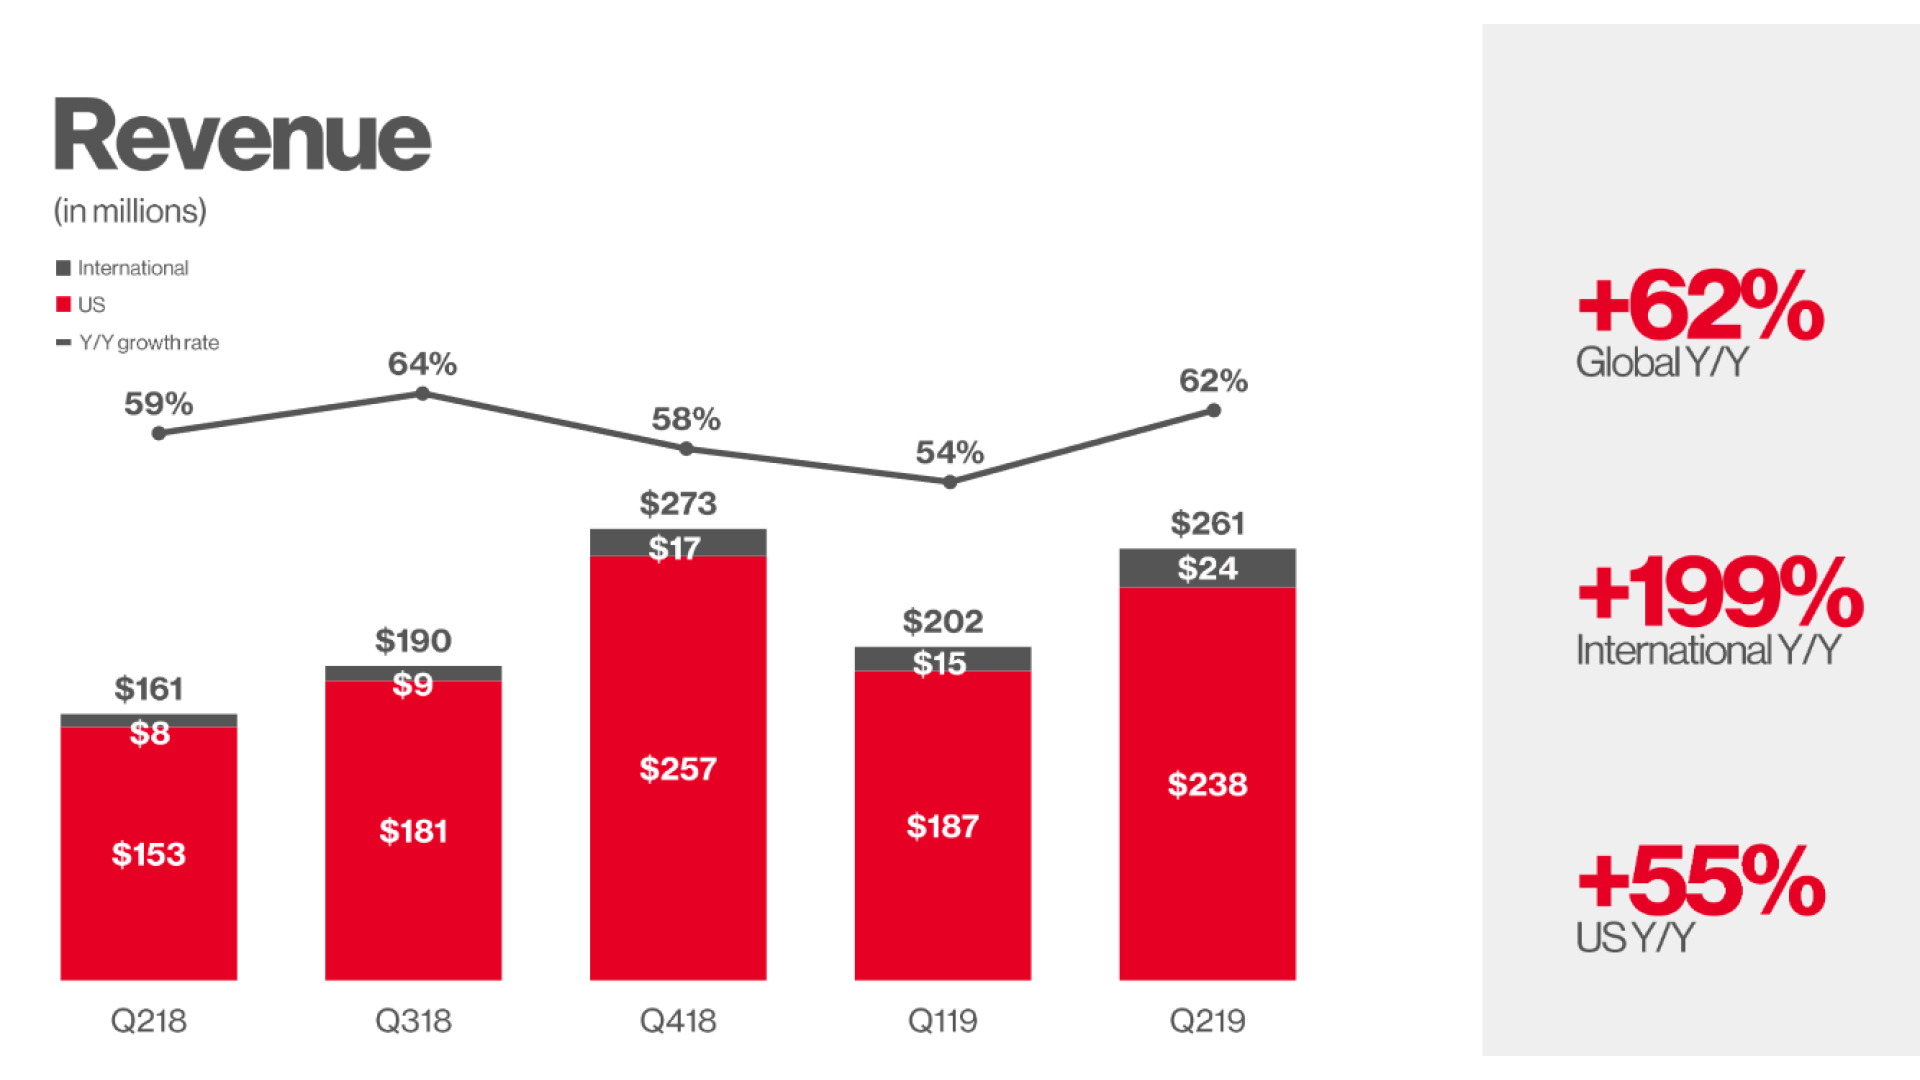 Pinterest revenue jumps 62%, monthly active users reaches 300 million